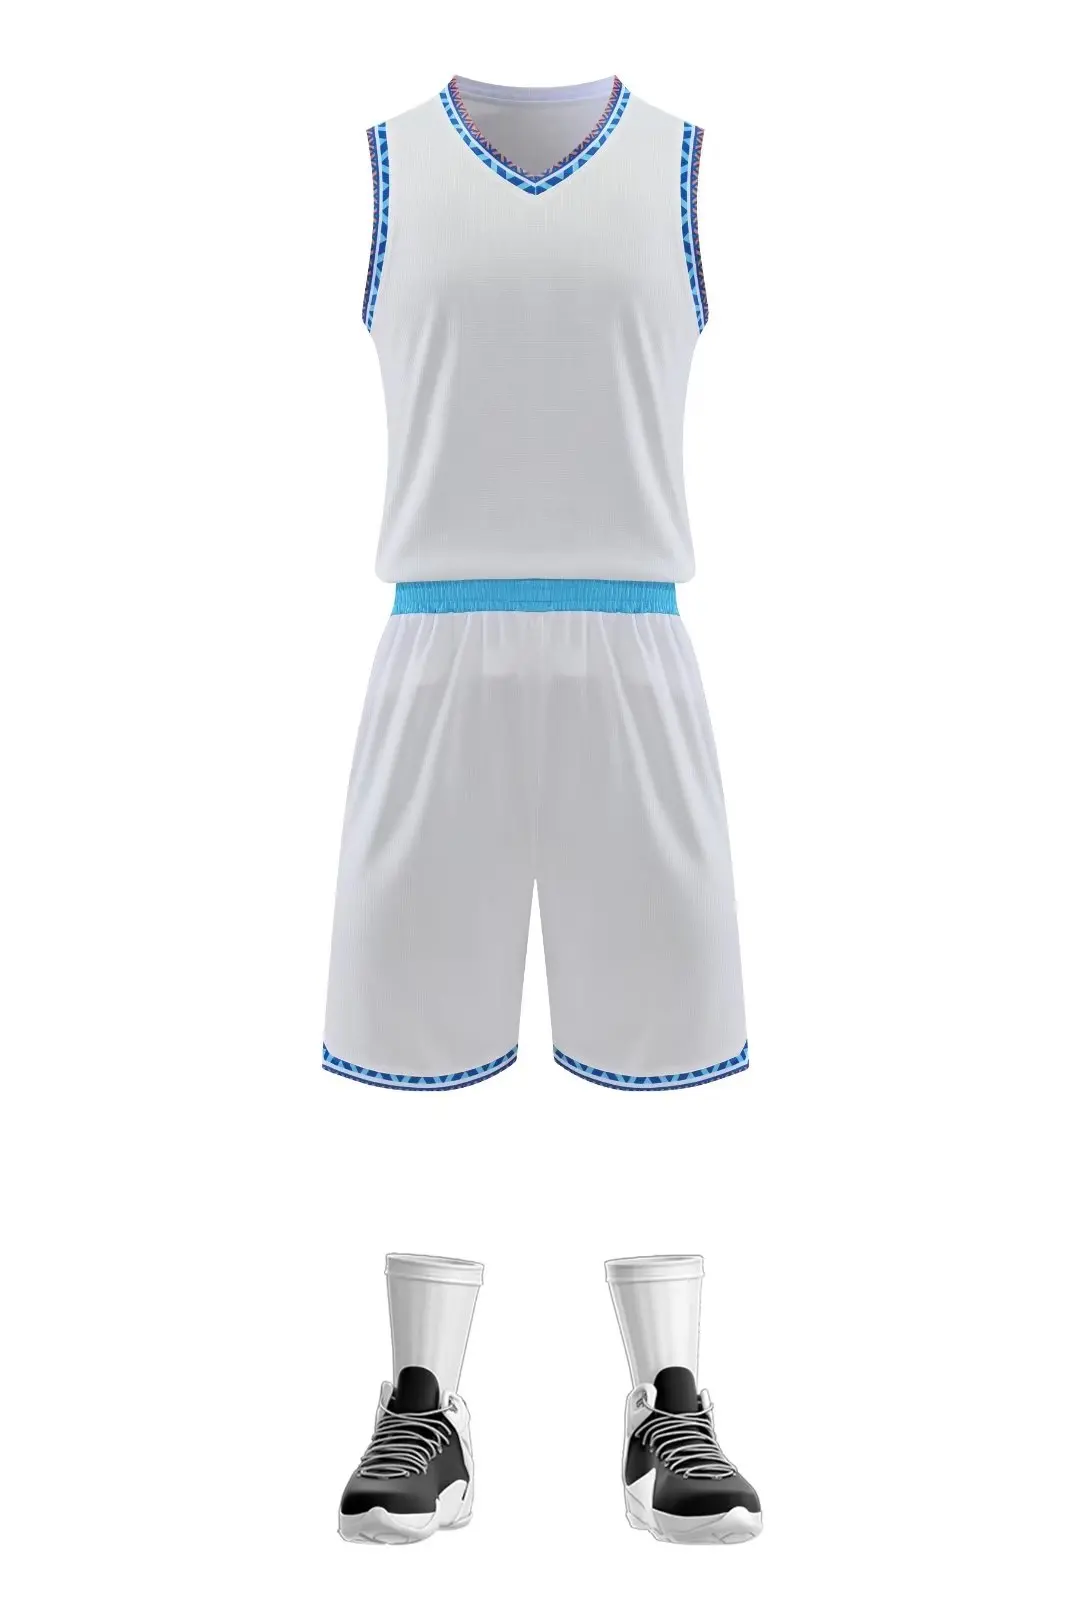 

New Custom Hign Quality Men's Basketball Kits Jersey Set Team Club Basketball Wear Print Number Basketball Uniforms